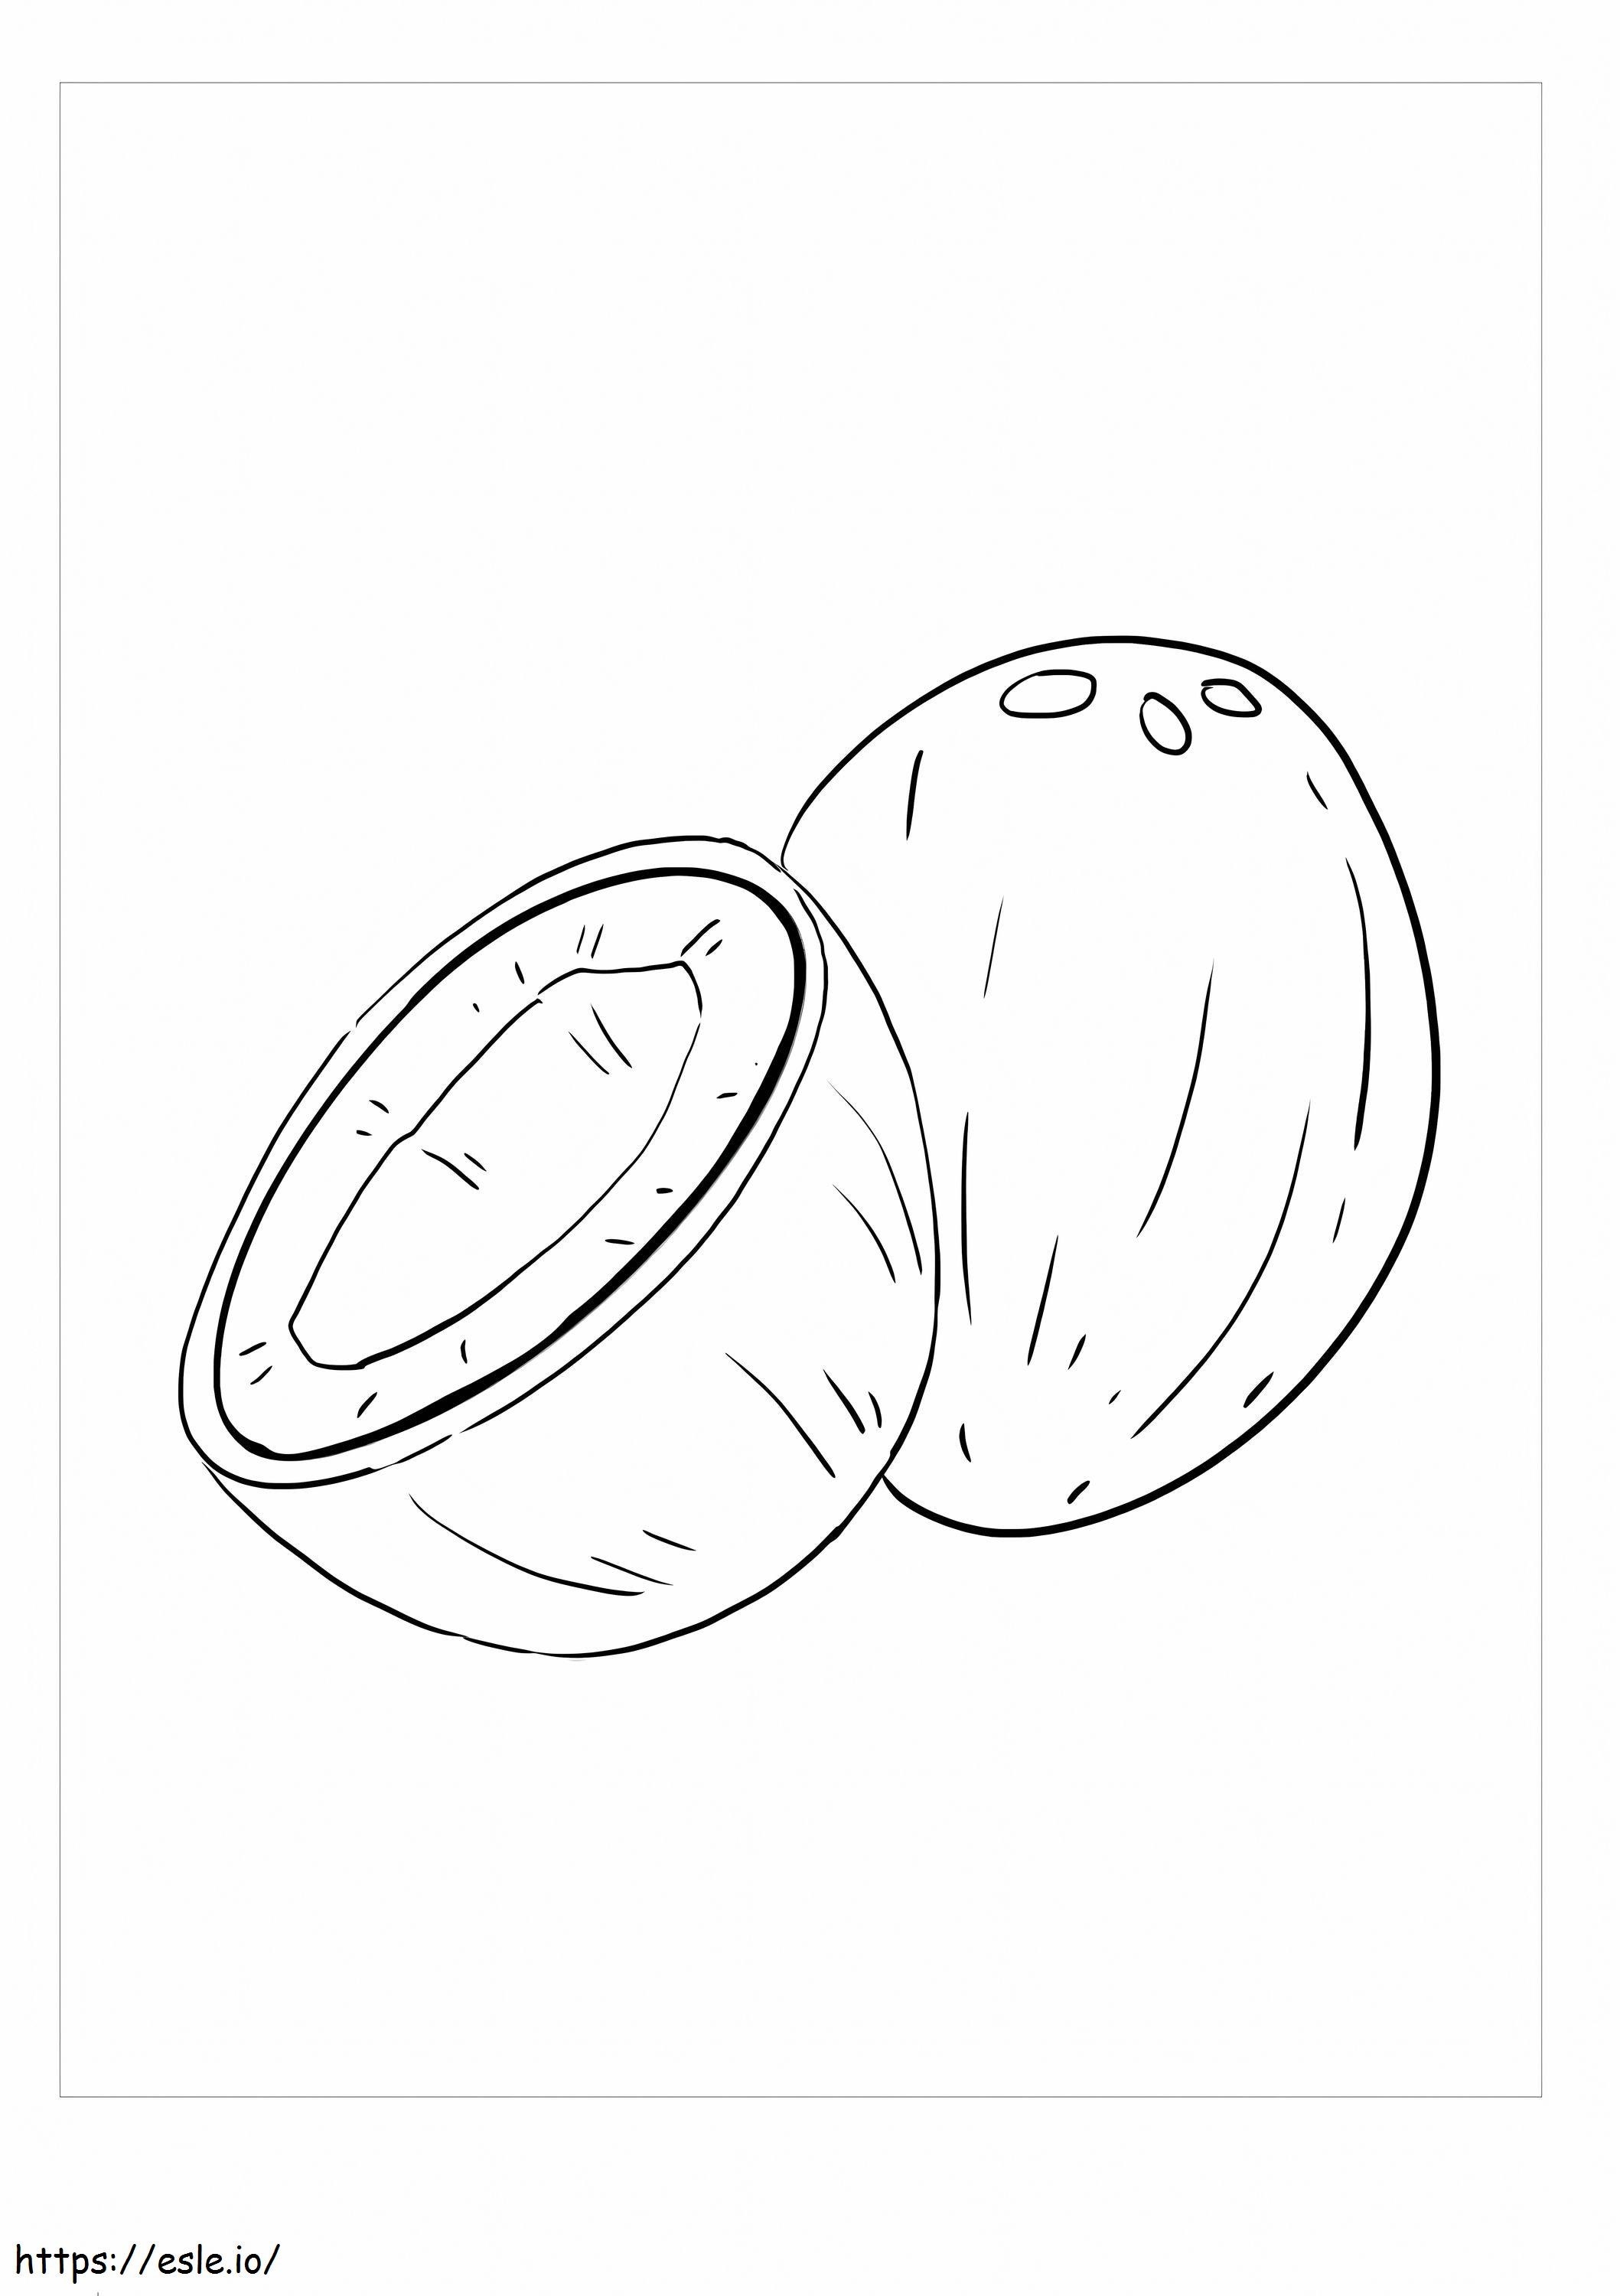 Normal Coconut coloring page